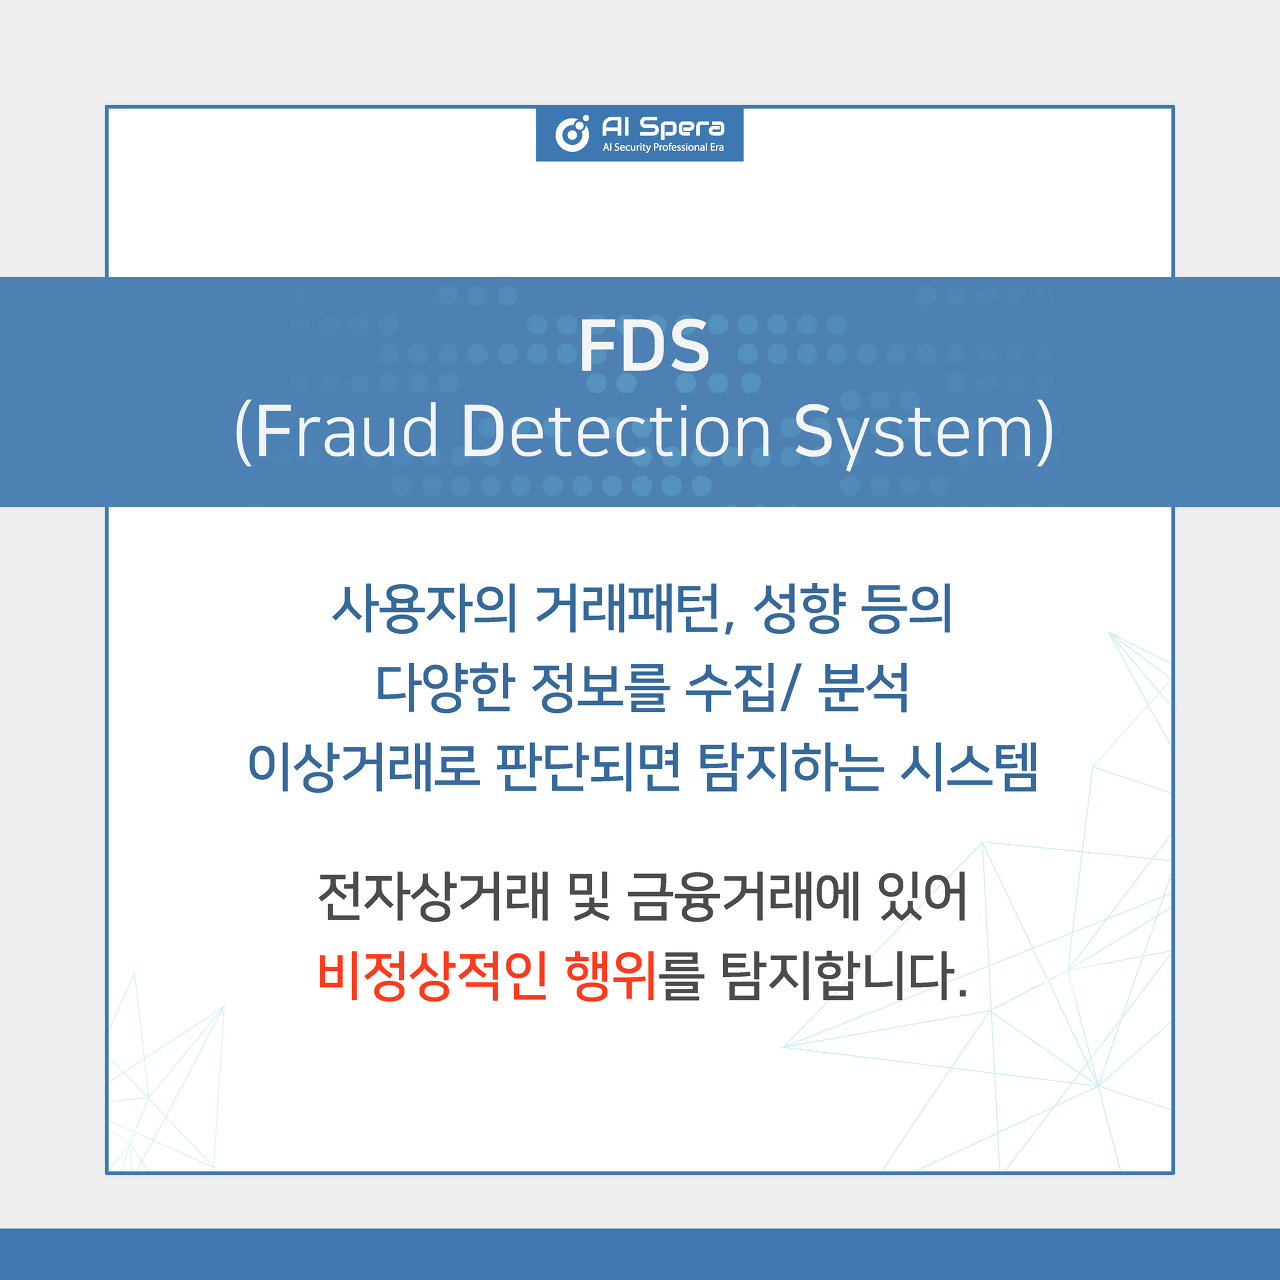 FDS(Fraud Detection System) - 사용자의 거래패턴, 성향 등의 다양한 정보를 수집/ 분석 이상거래로 판단되면 탐지하는 시스템, 전자상거래 및 금융거래에 있어 비정상적인 행위를 탐지합니다.